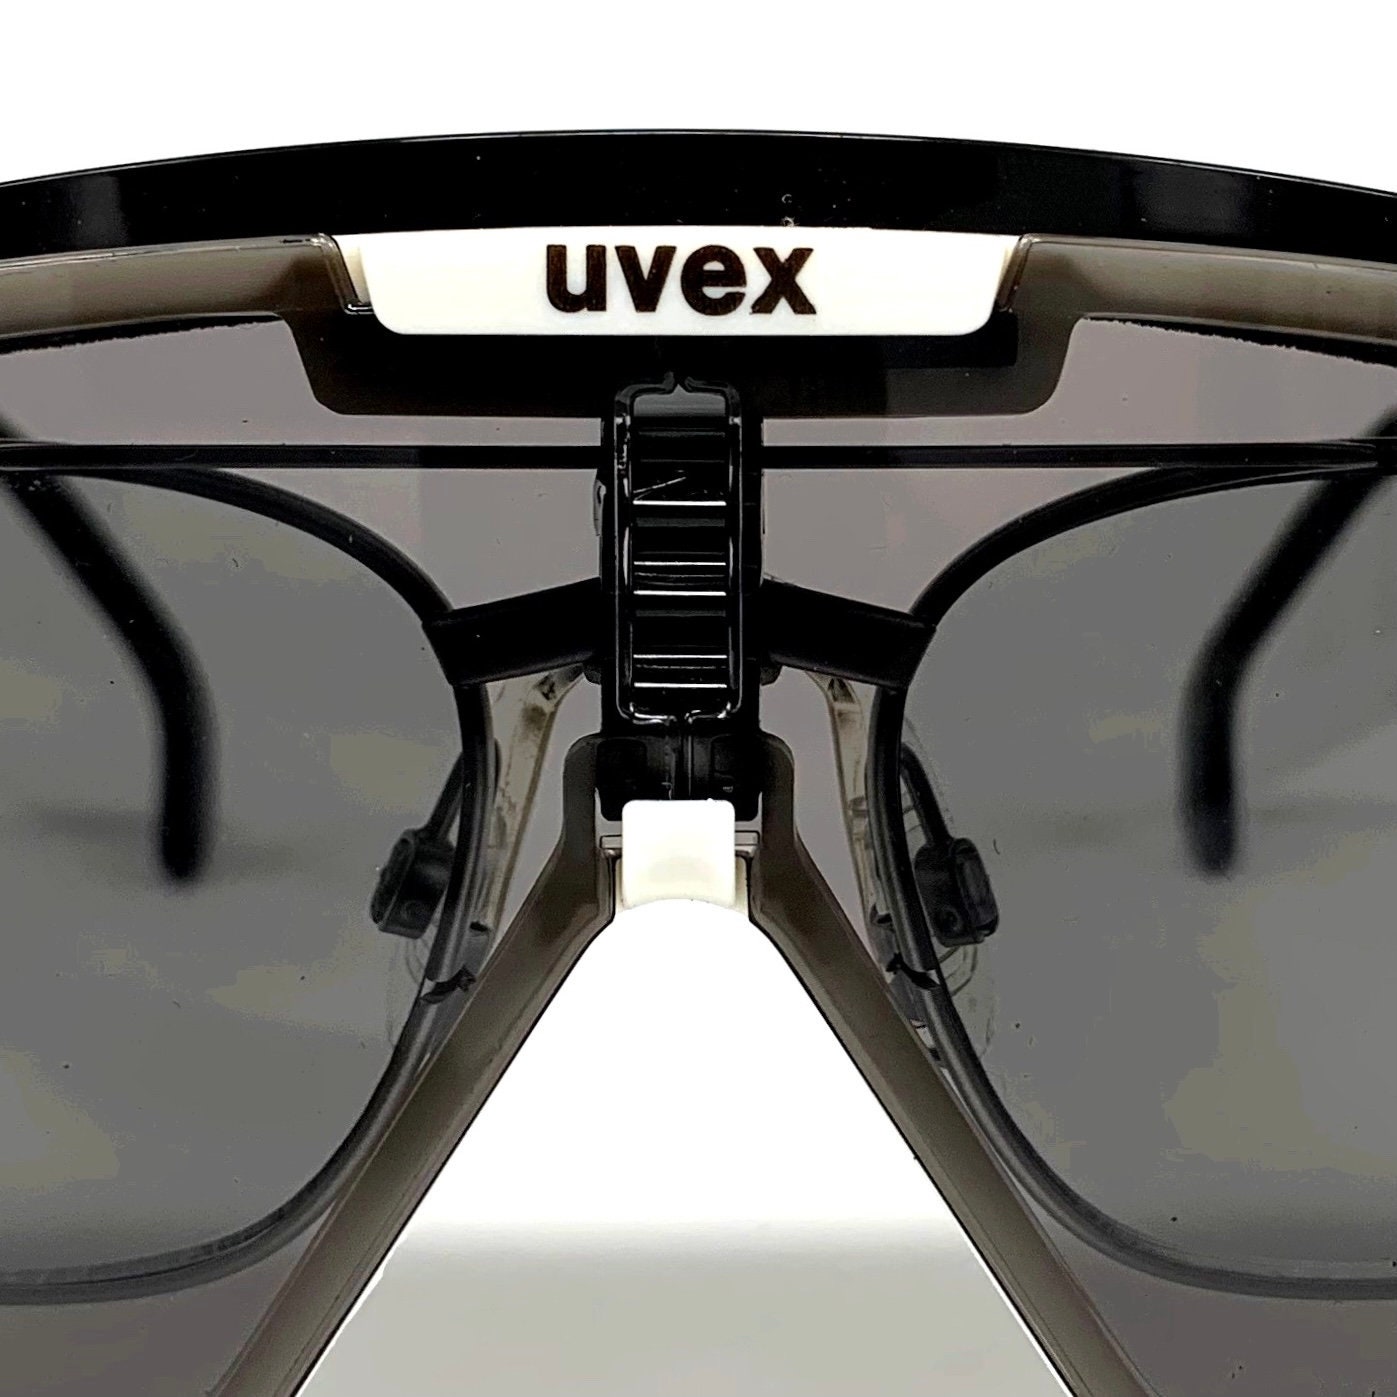 Origineel Collectors Item W.Germany 80's Vintage UVEX "TAKE OFF" zonnebril Accessoires Zonnebrillen & Eyewear Sportbrillen 